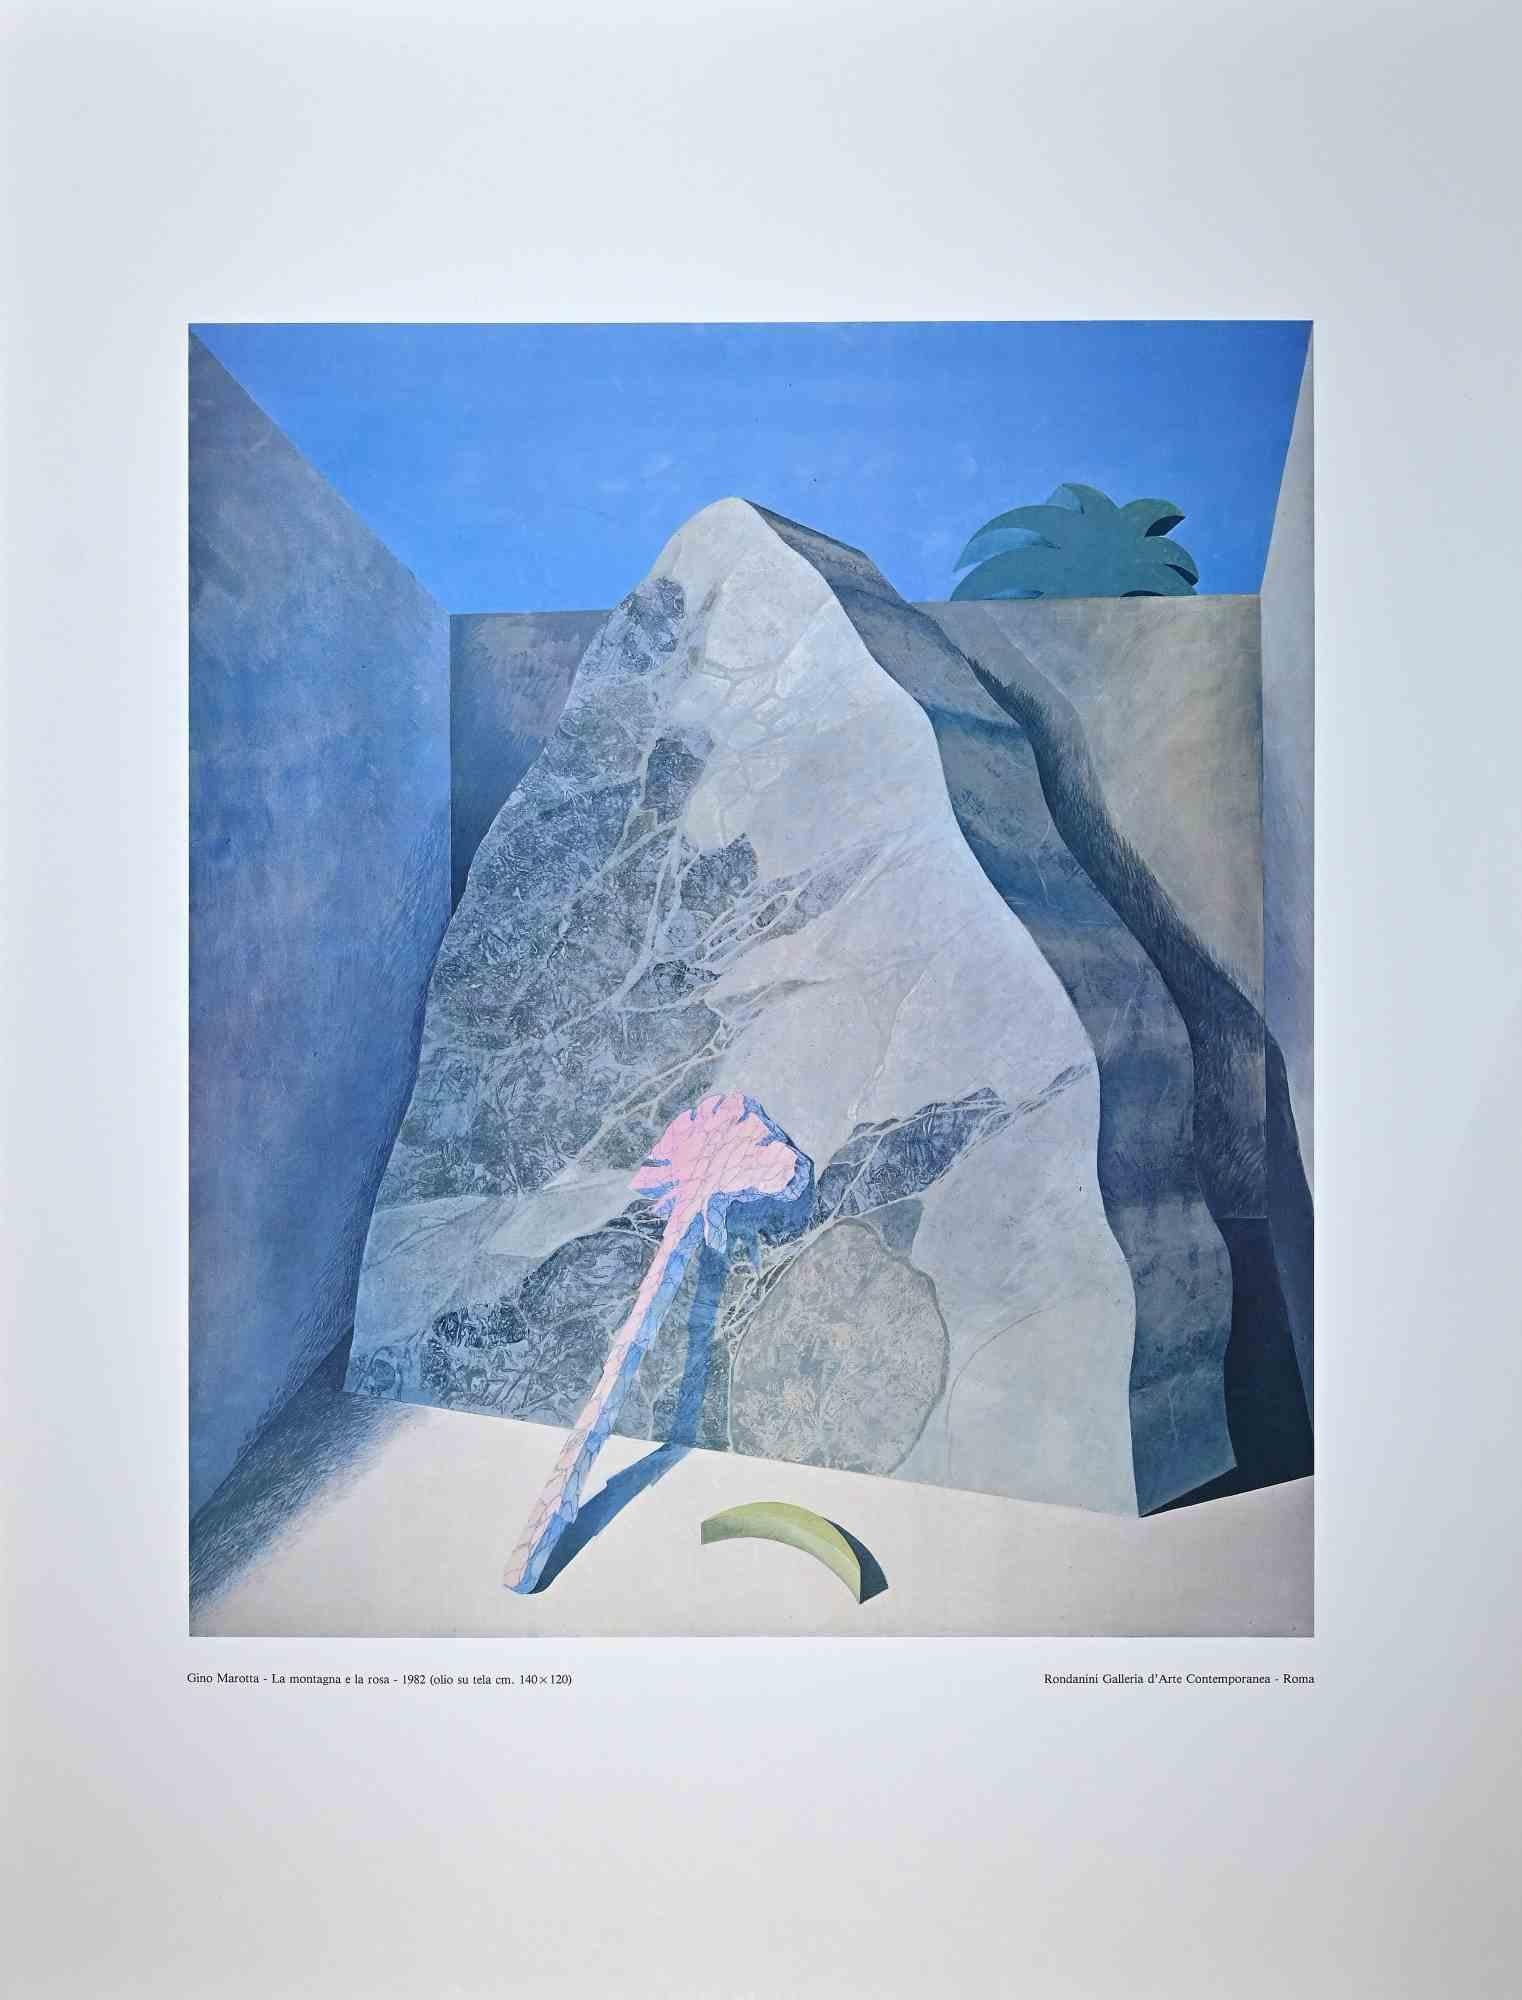 La montagna e la rosa - Poster d'epoca di G. Marotta - 1982